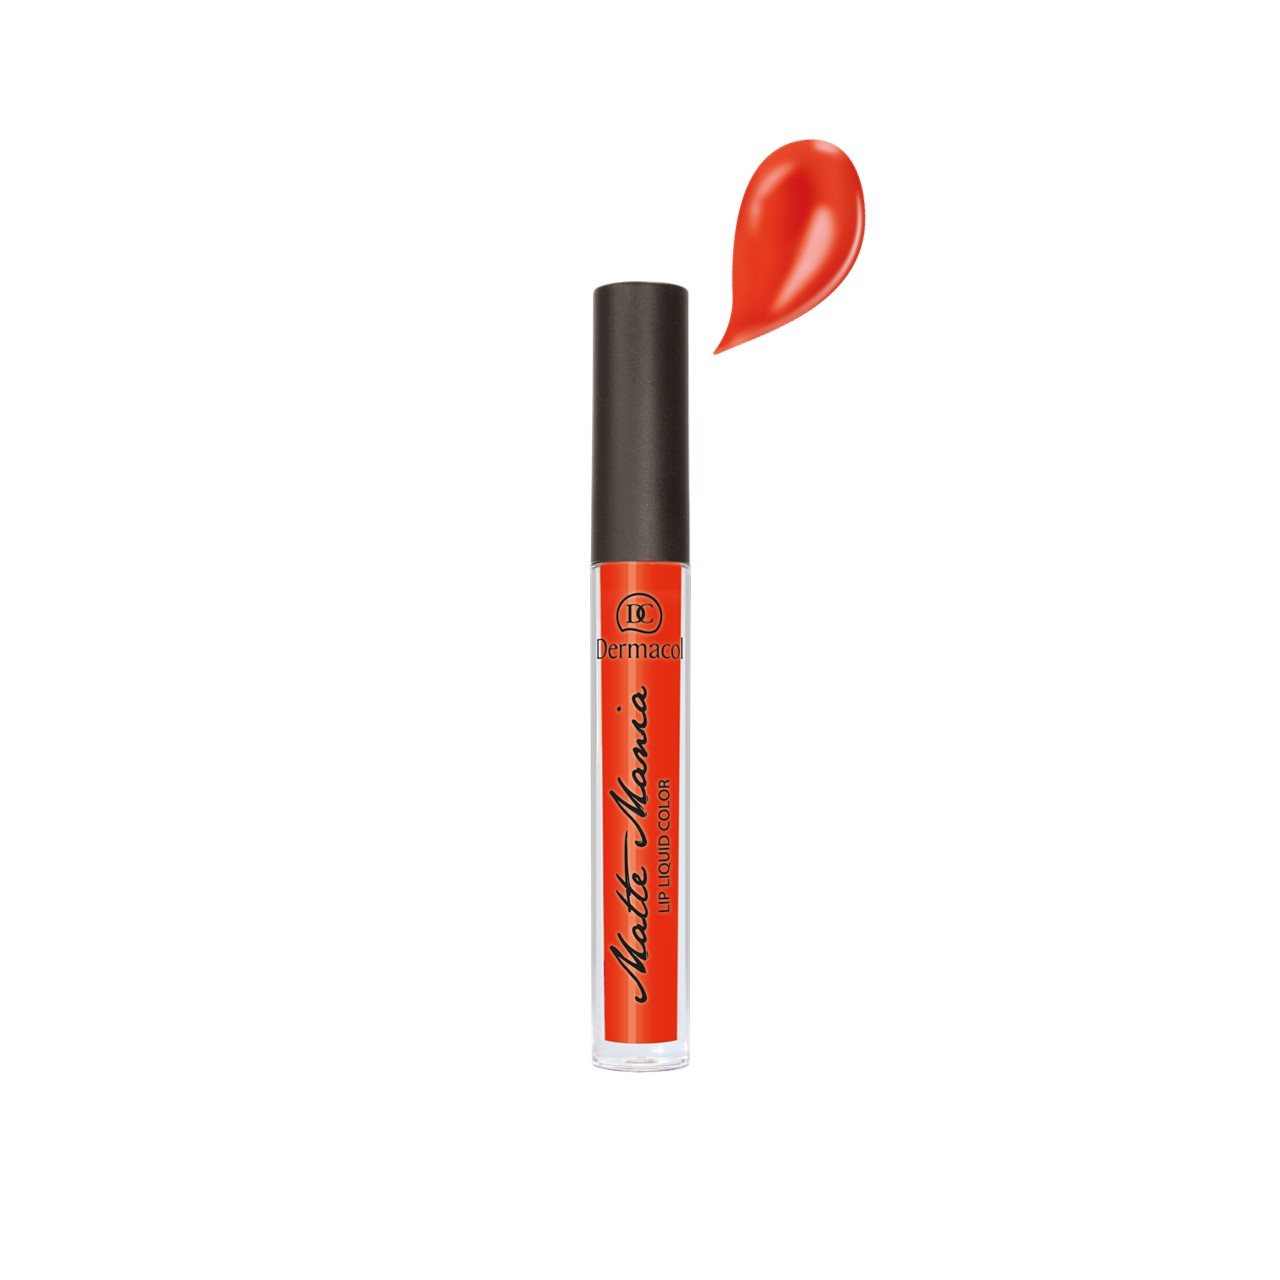 Dermacol Matte Mania Liquid Lip Colour 51 3.5ml (0.12fl oz)